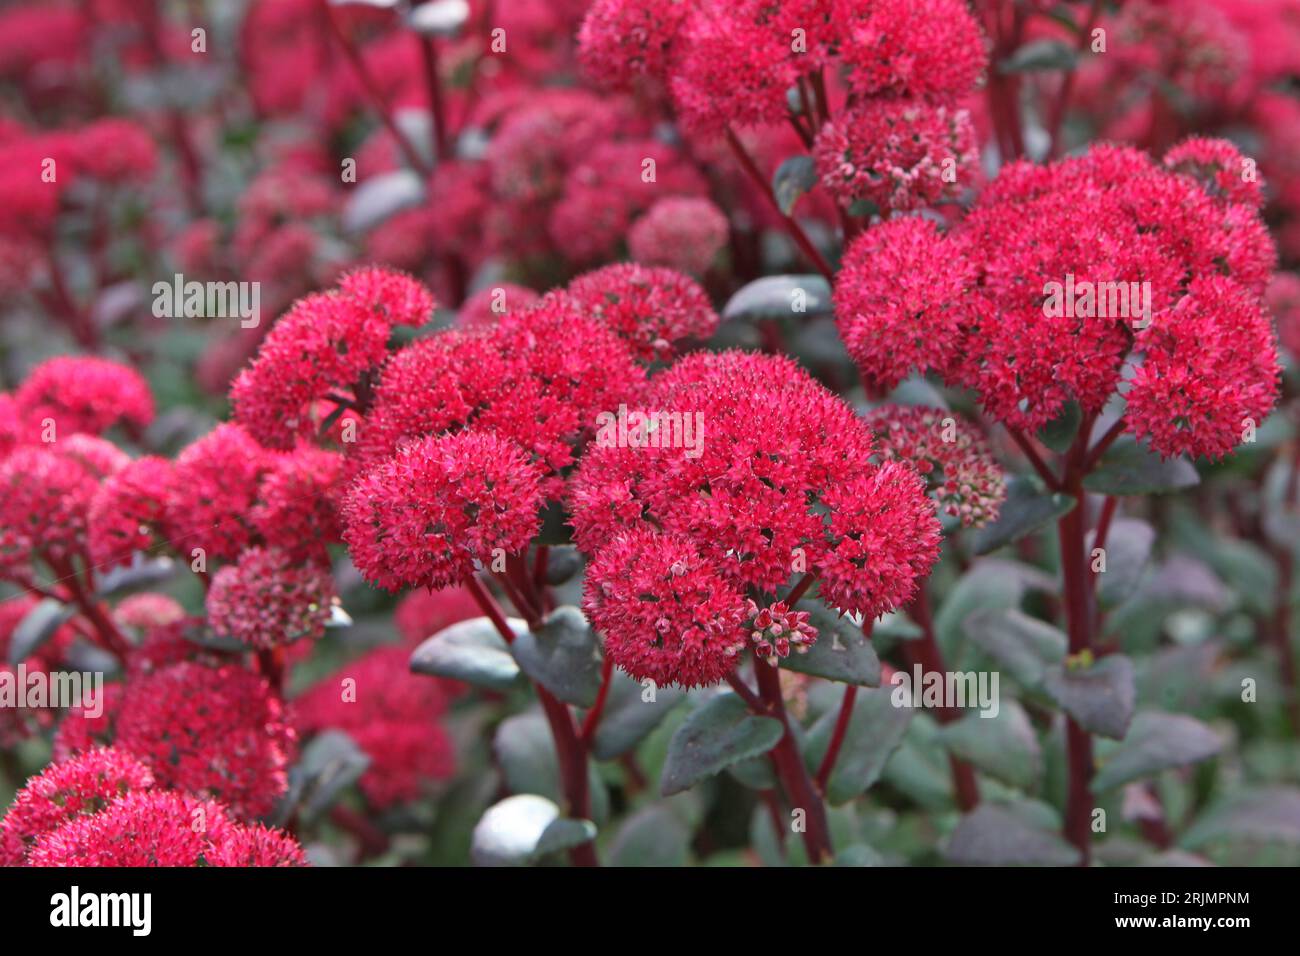 Red Hylotelephium Sedum, or stonecrop, ÔRed CauliÕ in flower. Stock Photo